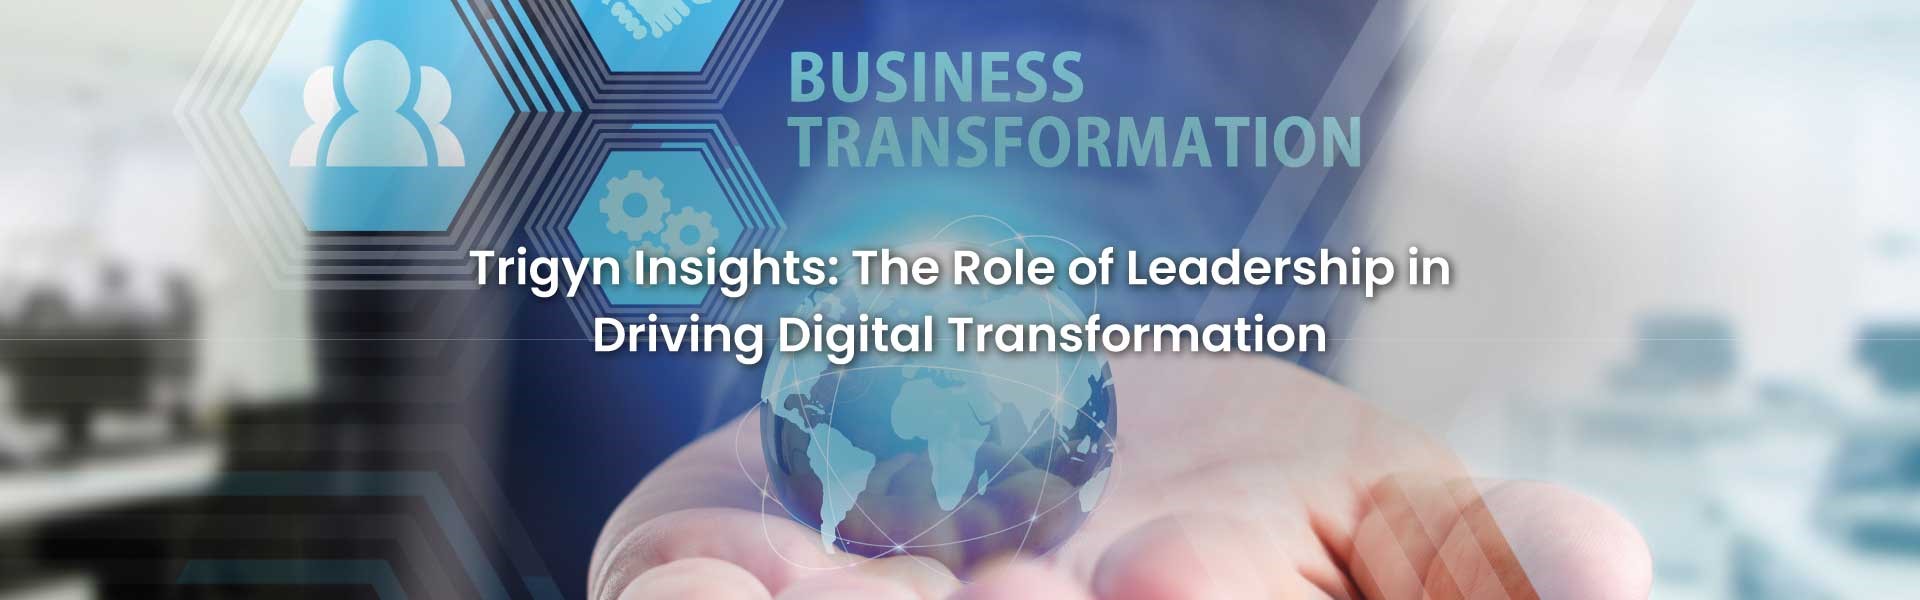  Leadership in Driving Digital Transformation 